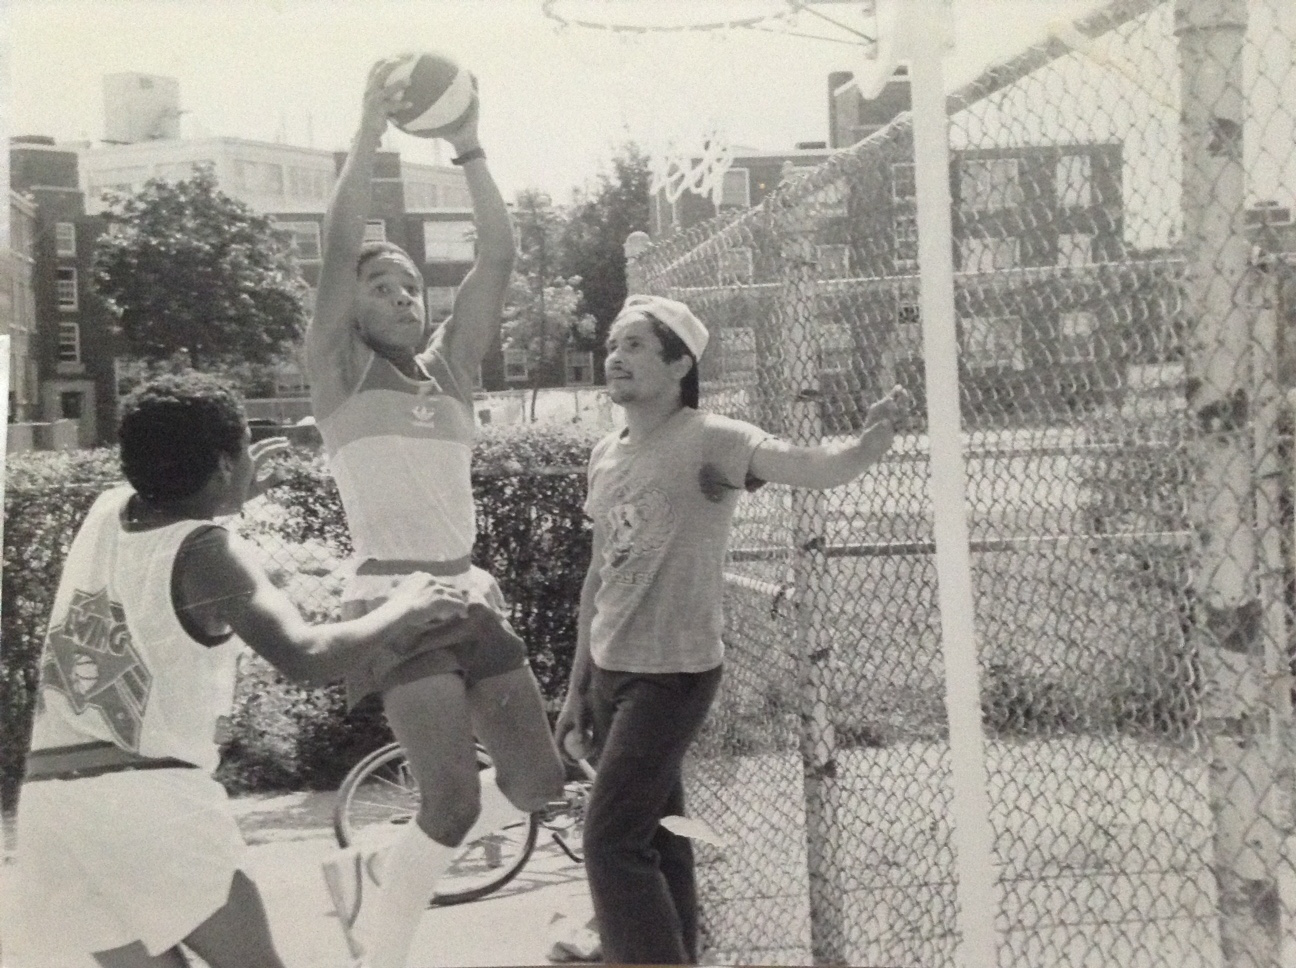 Tico Garcia (left) plays basketball with his twin, Daco Garcia, as Rainier Rosado looks on.